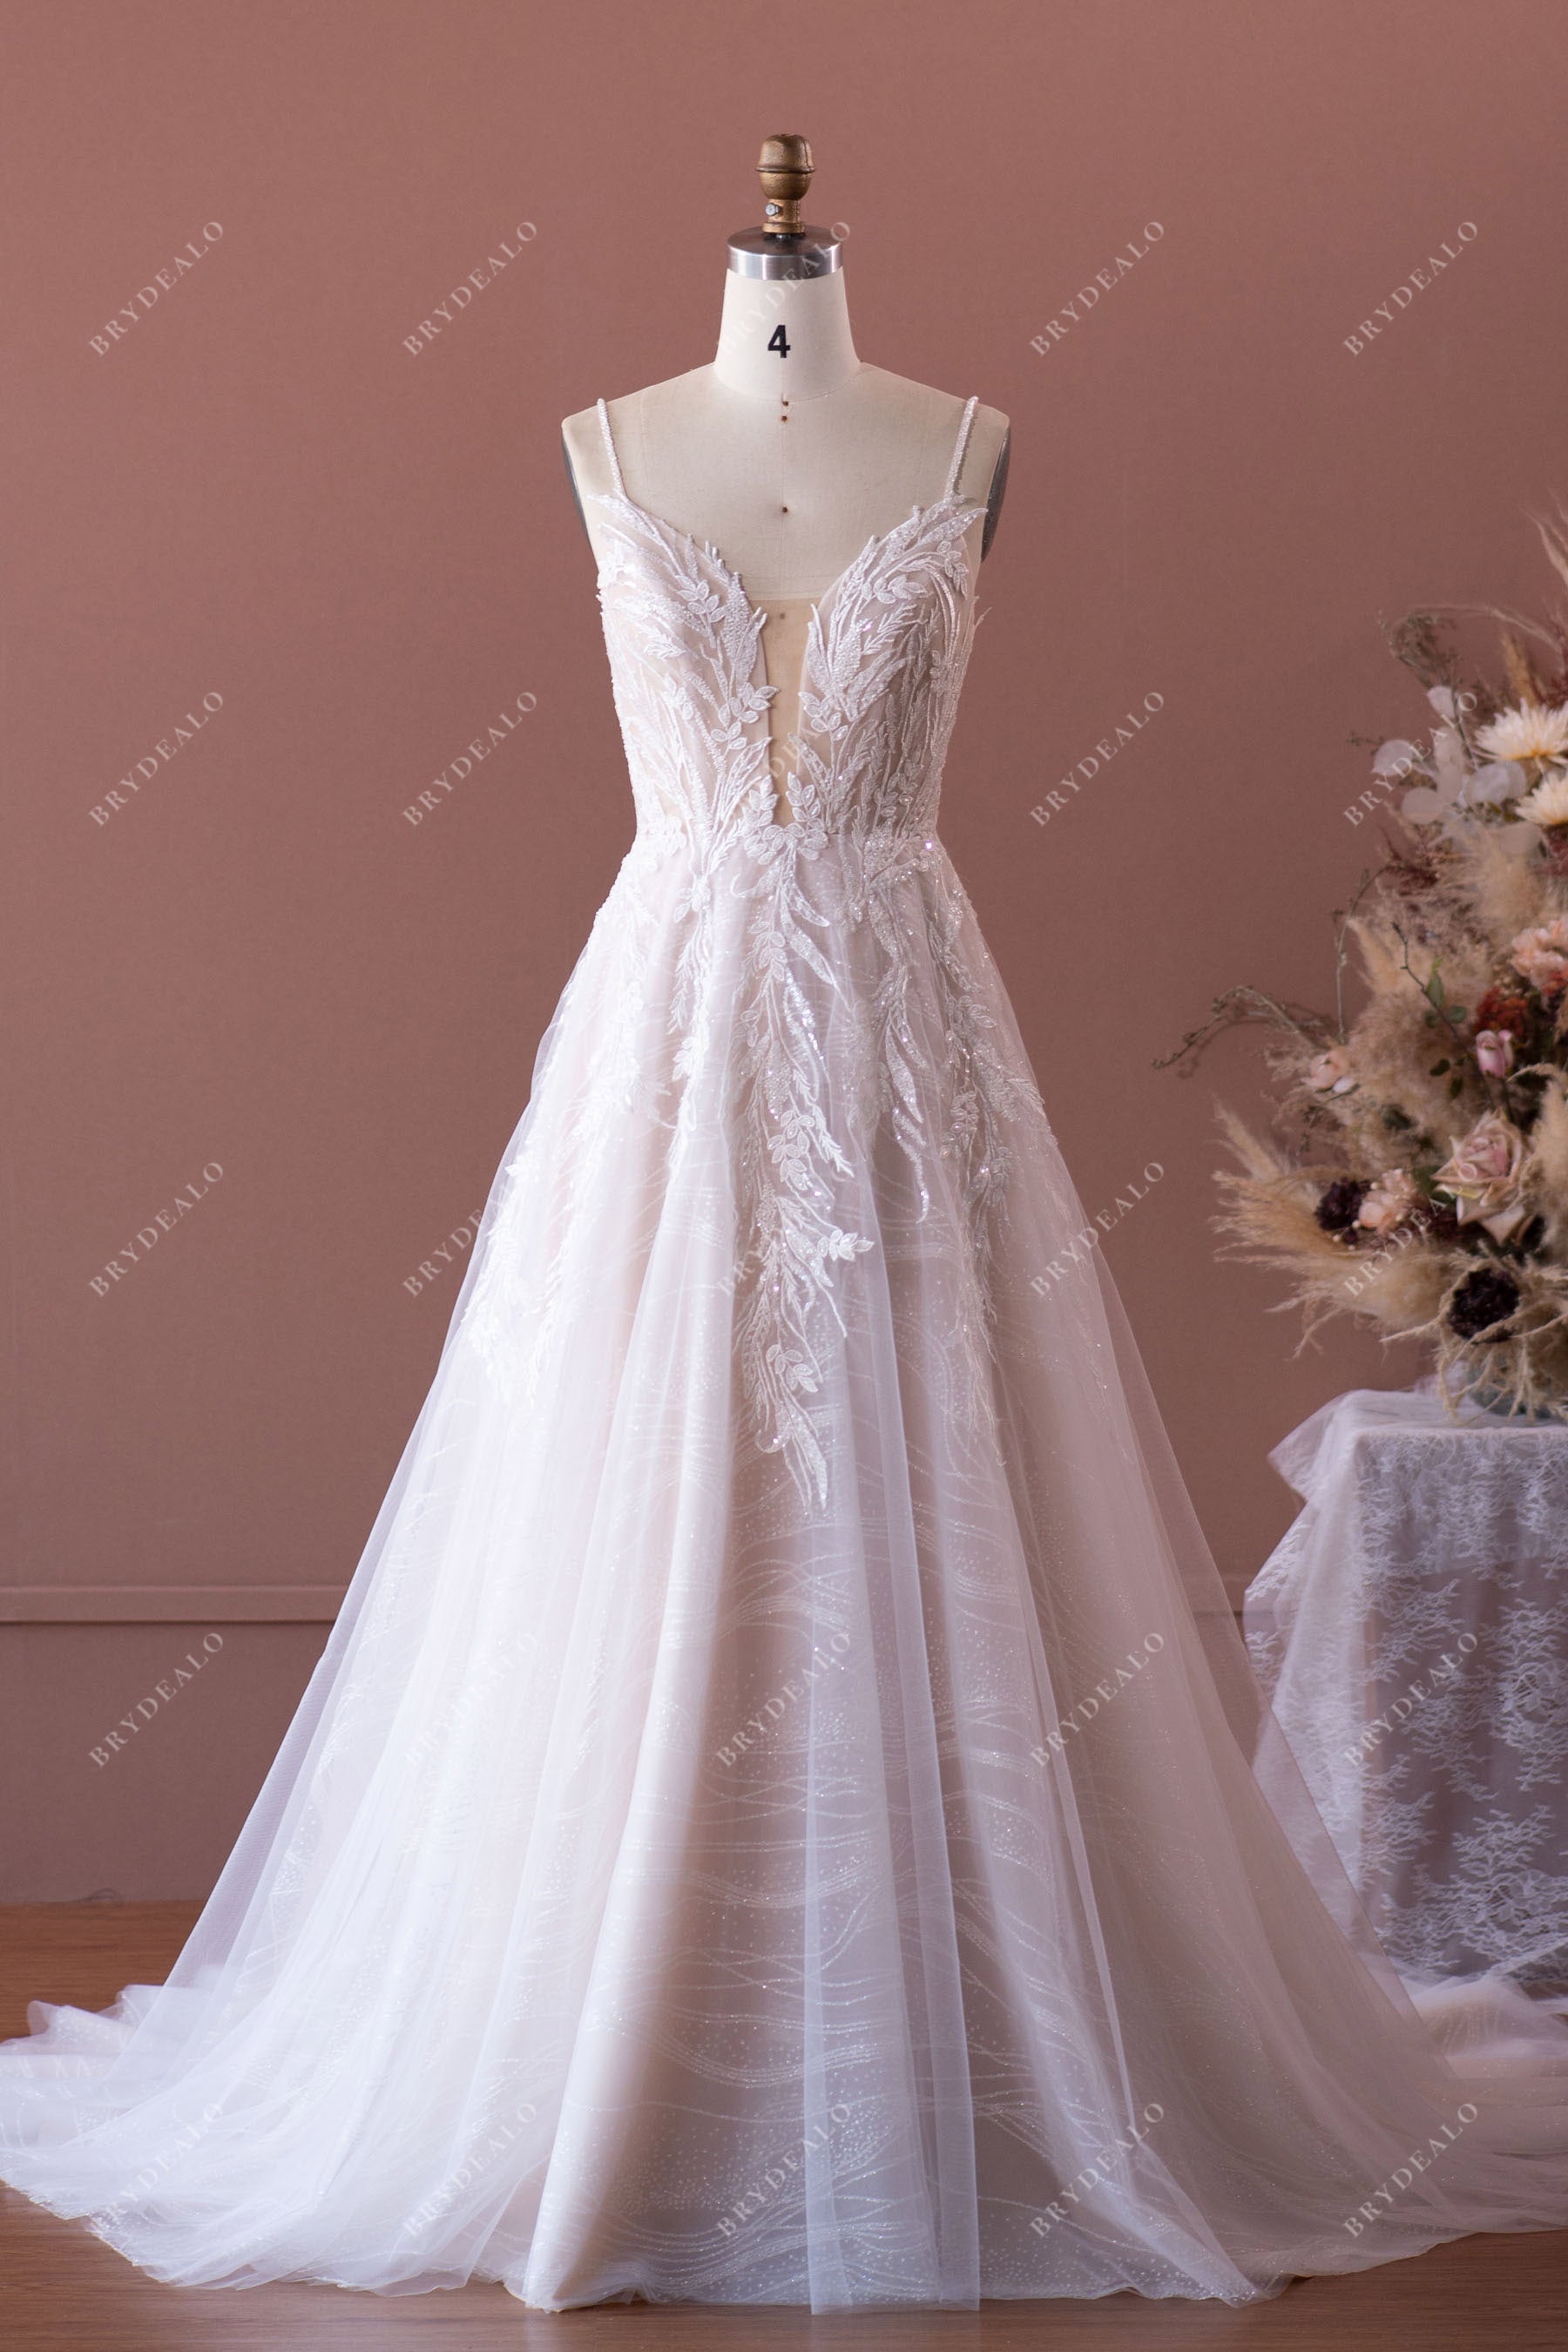 Plunging Neck Spaghetti Straps Lace Boho Wedding Dress - VQ